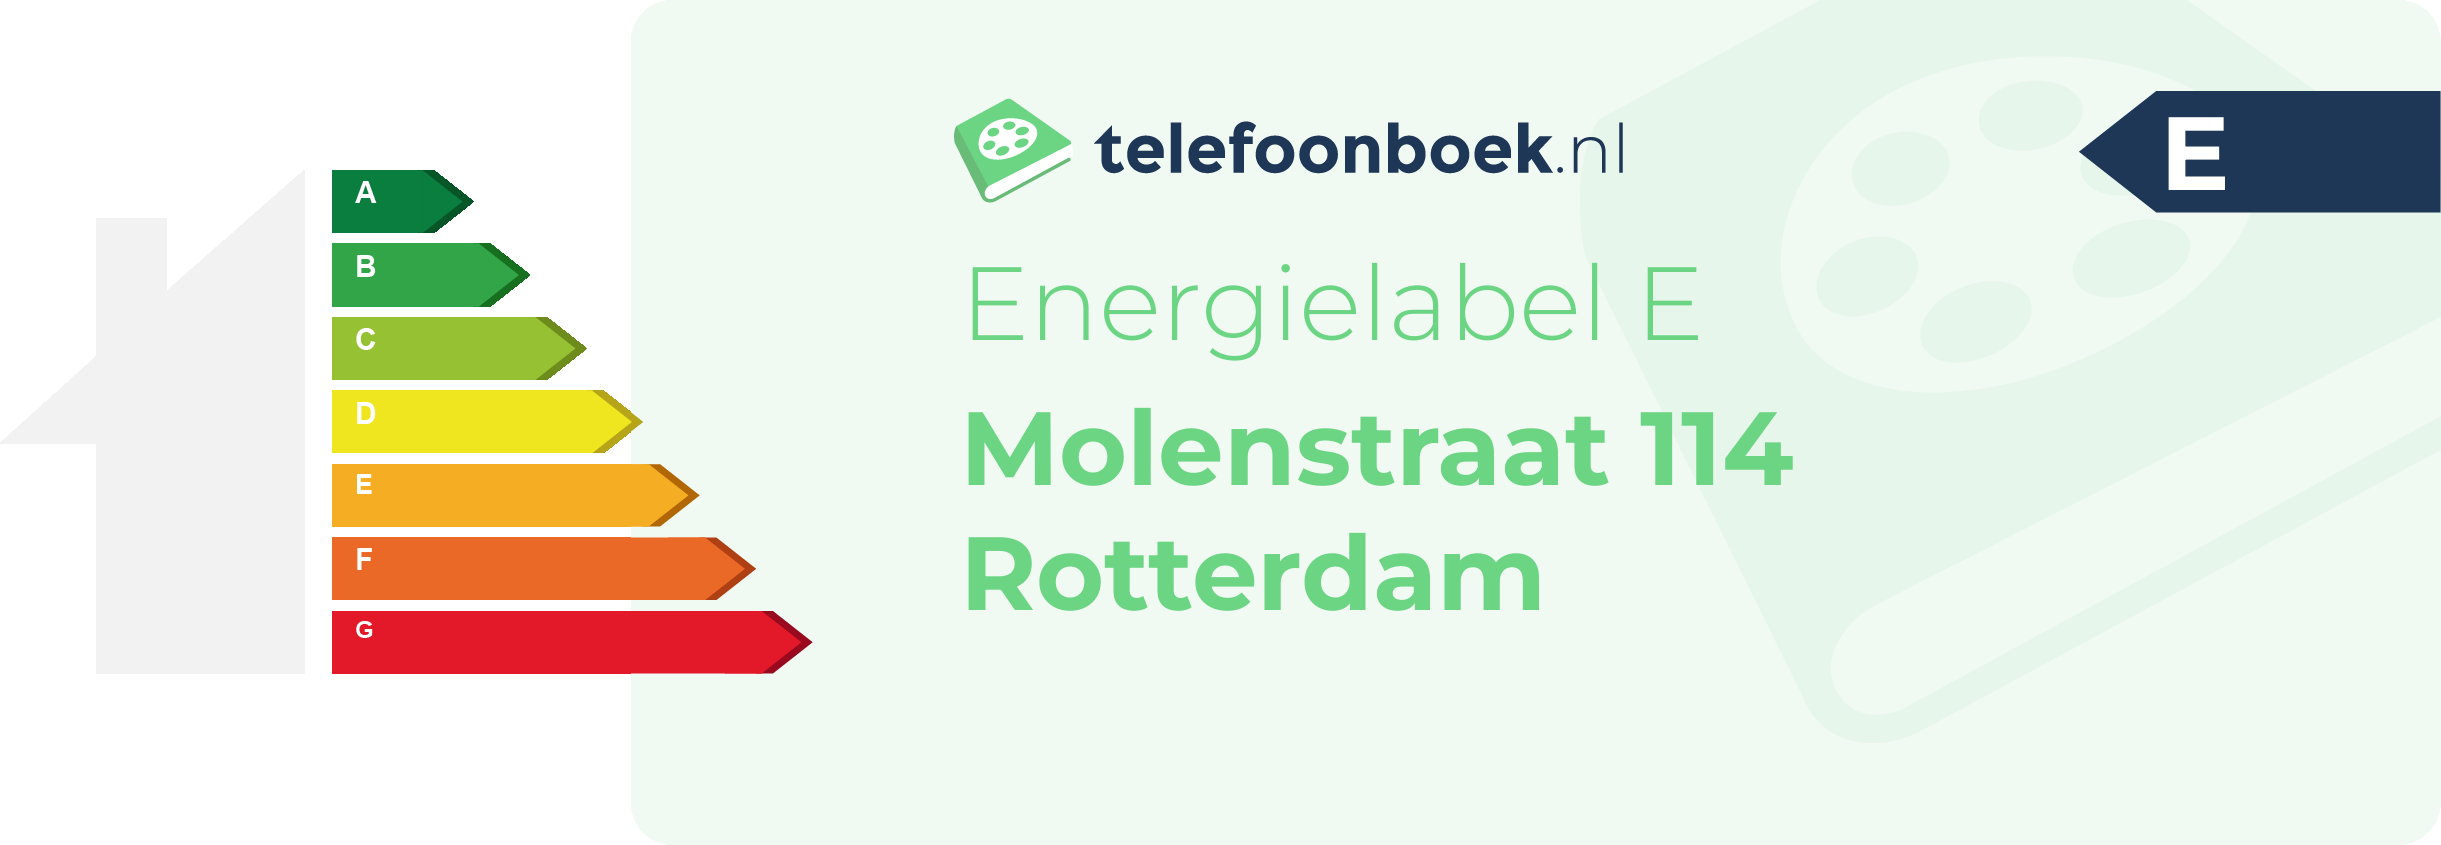 Energielabel Molenstraat 114 Rotterdam